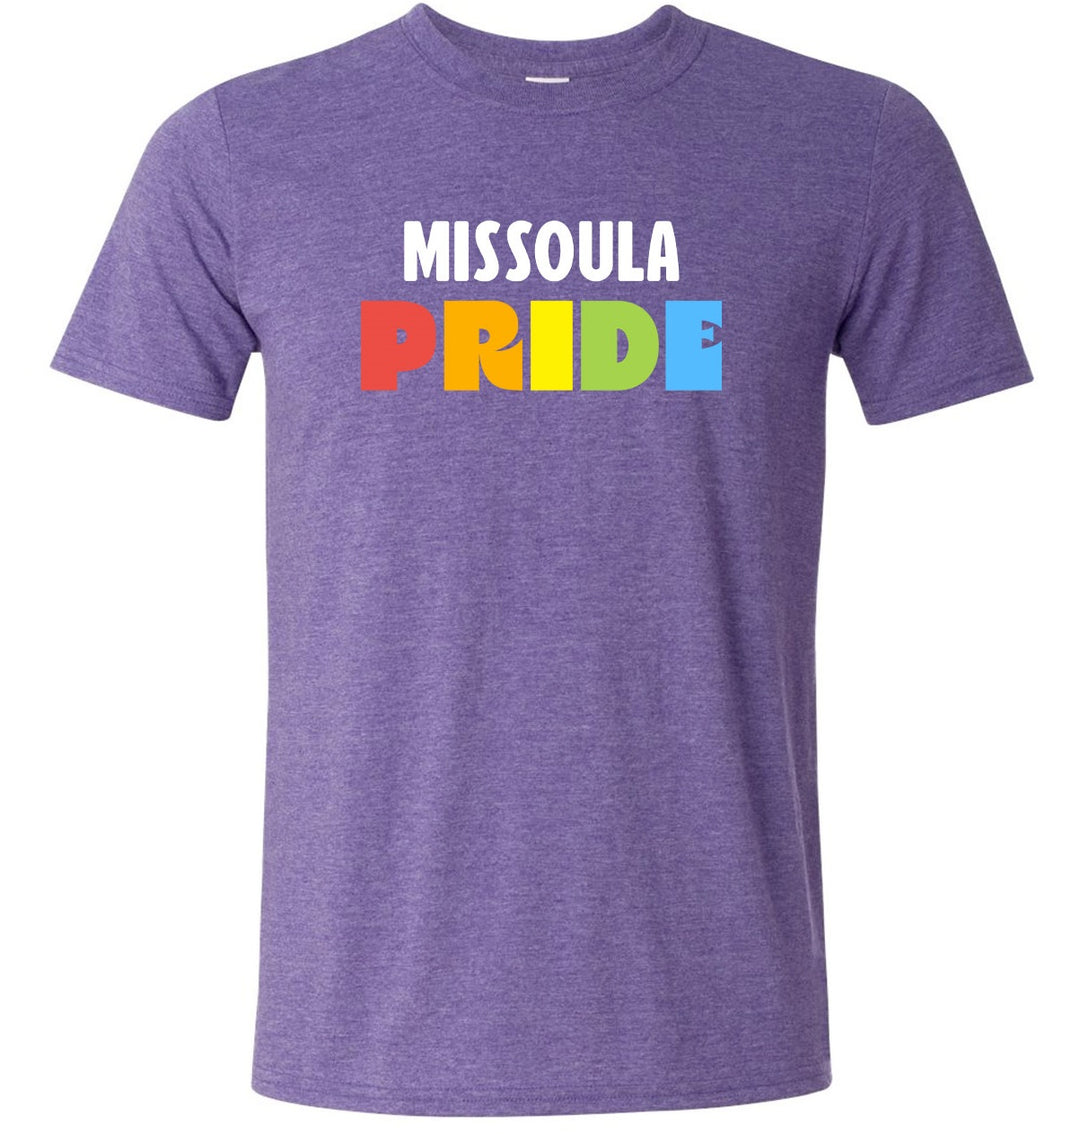 Missoula PRIDE T-Shirt - Black or Purple